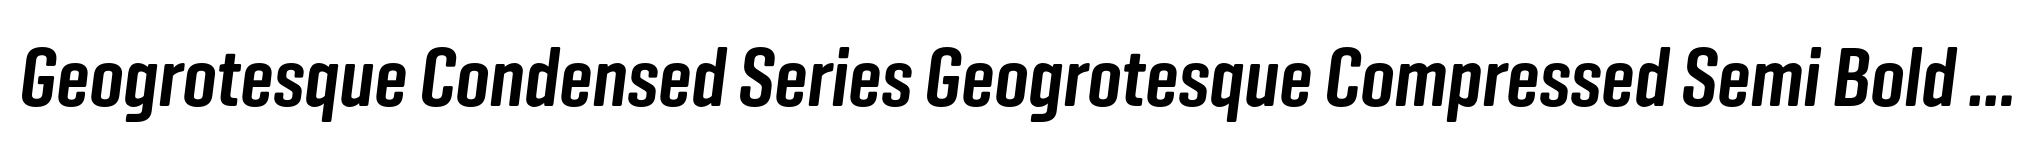 Geogrotesque Condensed Series Geogrotesque Compressed Semi Bold Italic image